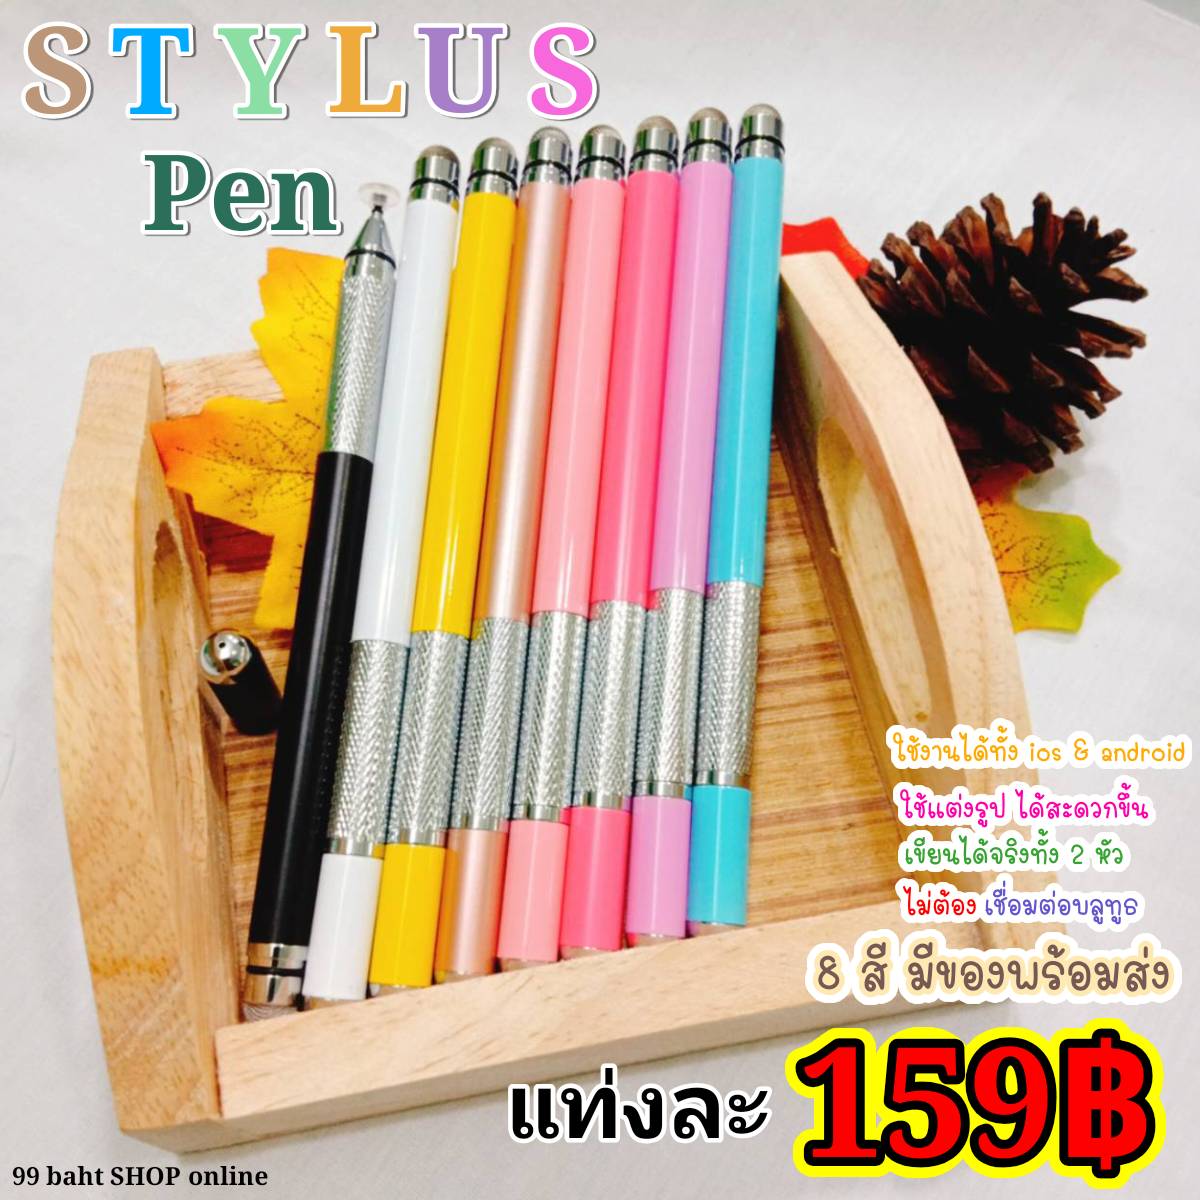 Stylus Pen 2 in 1 ปากกาเขียนมือถือ แต่งรูป วาดรูป จดโน็ต (สีพาสเทล)